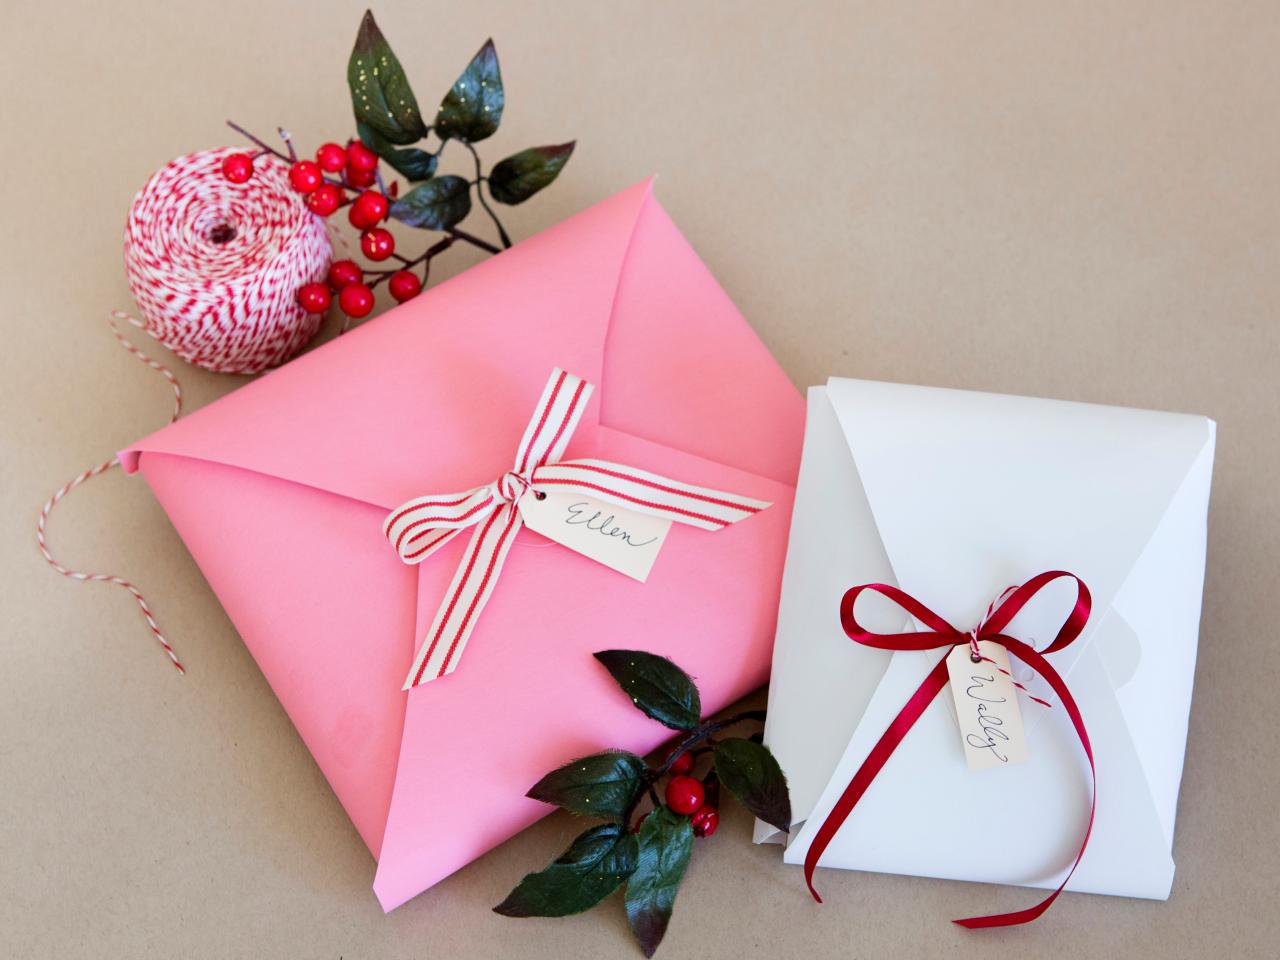 Festive Envelopes - Christmas Wrapping ideas